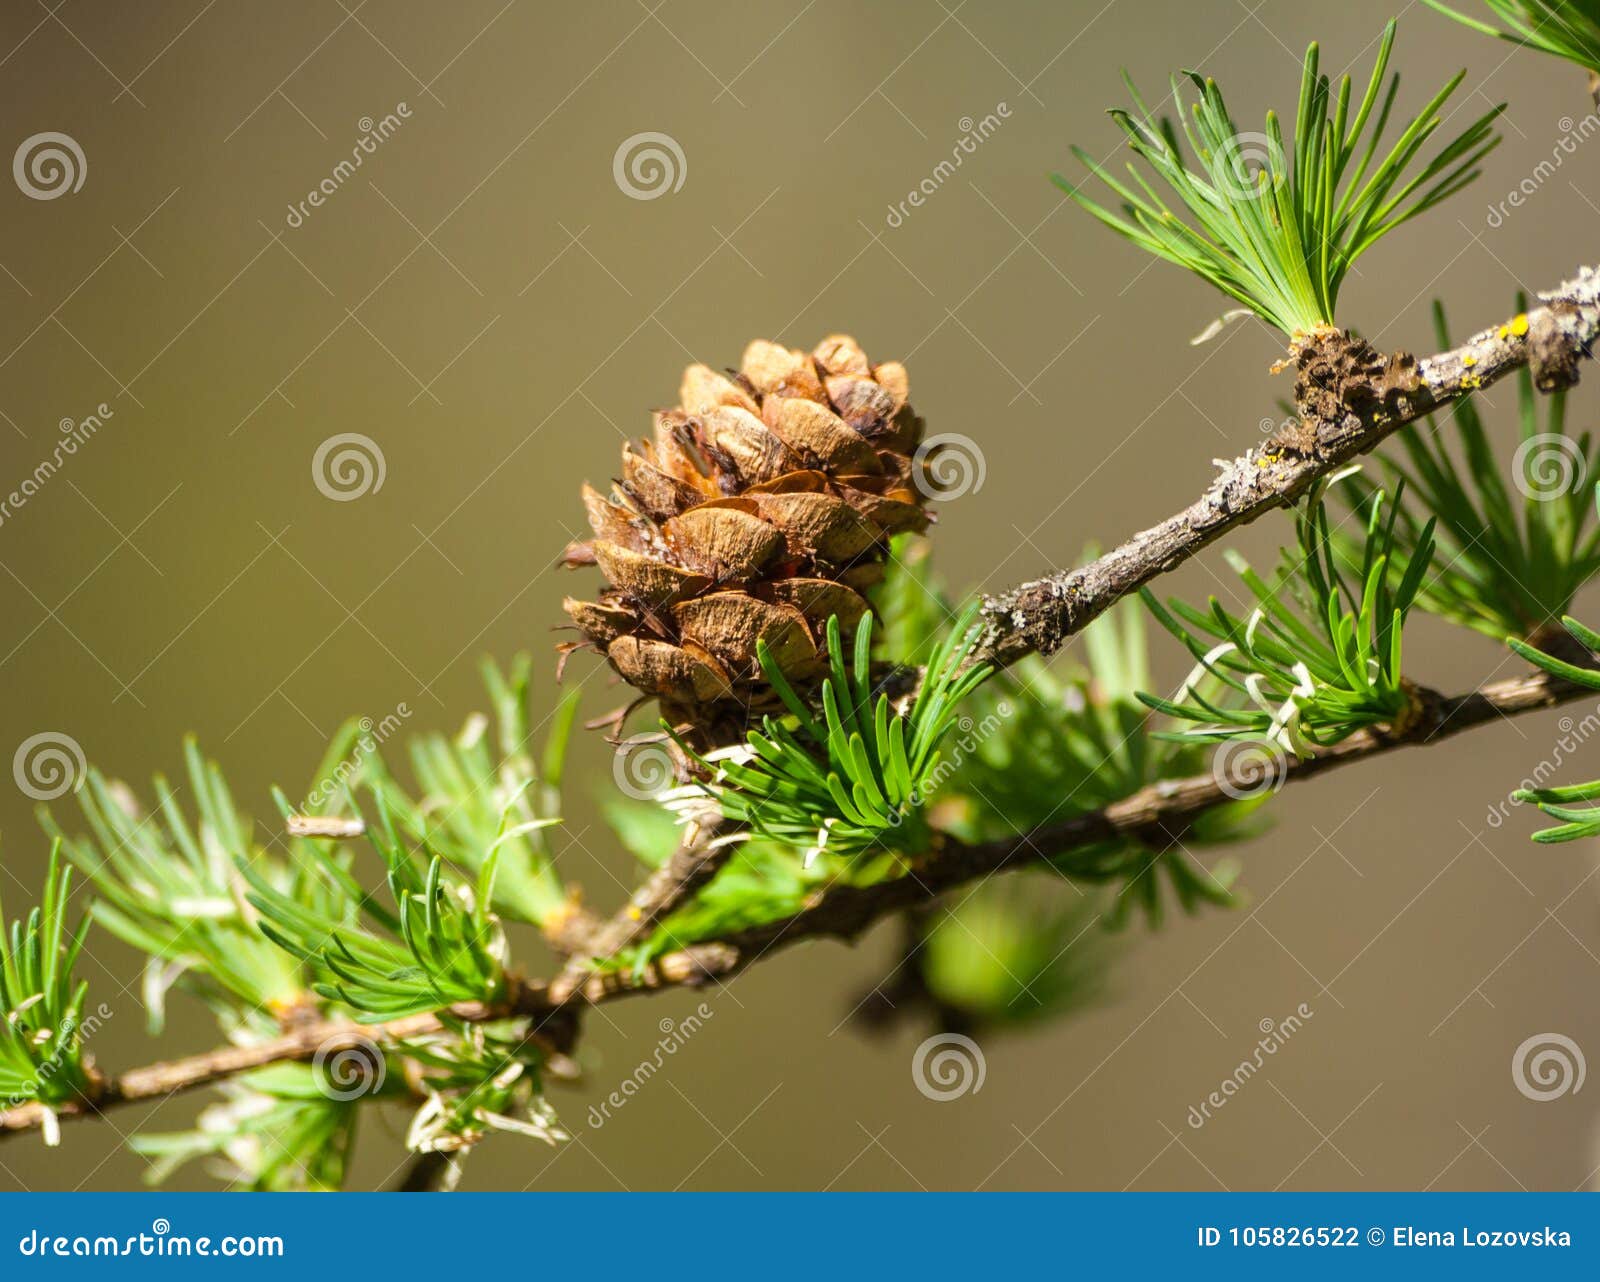 larix kaempferi carriere, pinaceae, tree branch